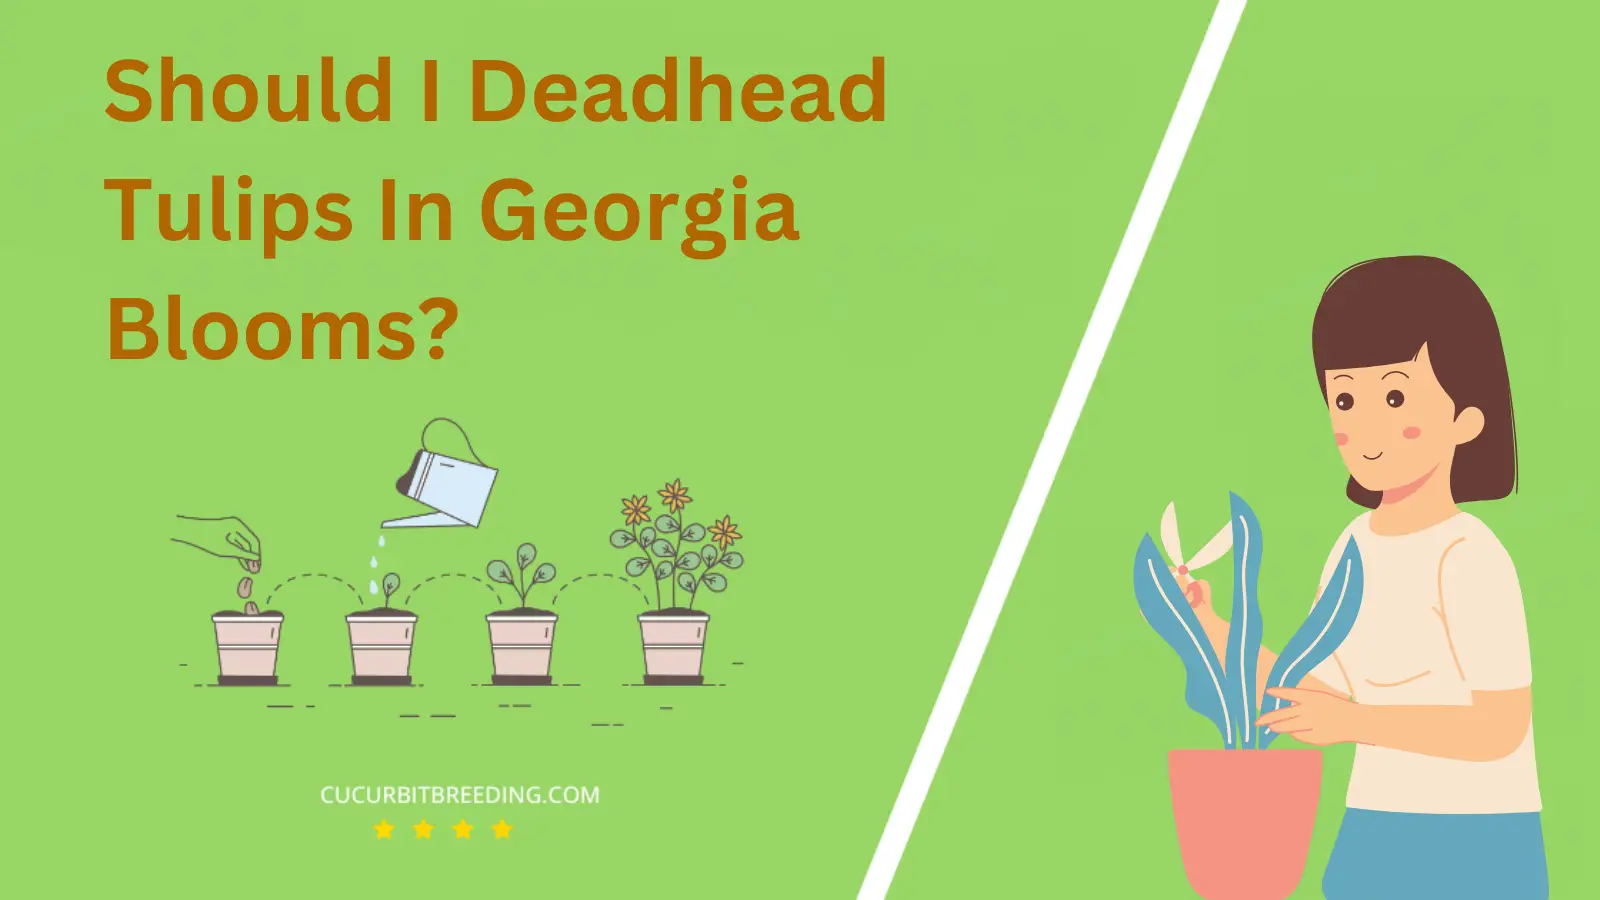 Should I Deadhead Tulips In Georgia Blooms?